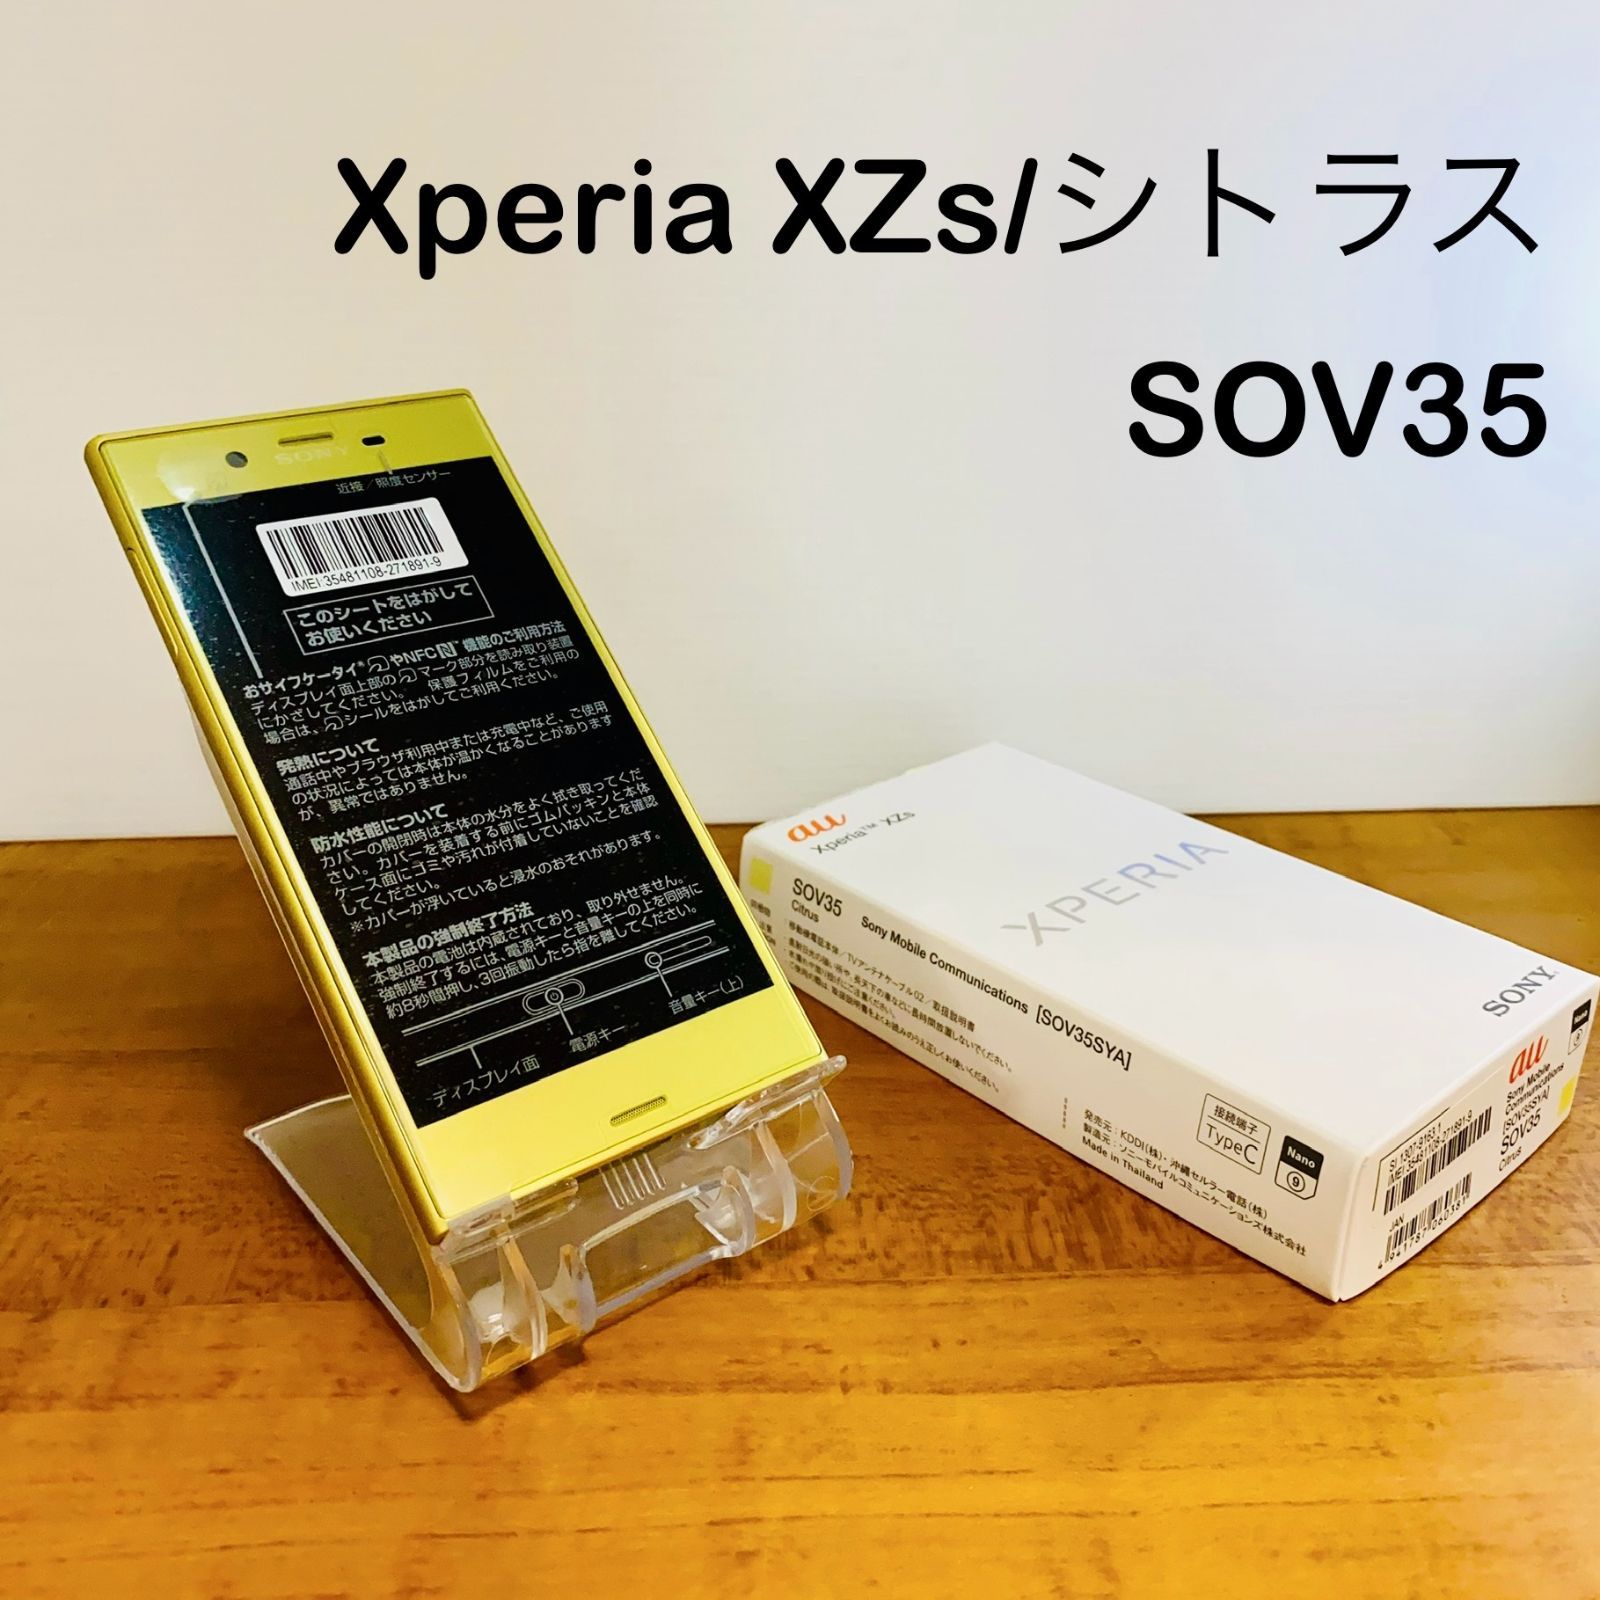 XperiaXZs (SOV35)  シトラス
 SIMロック解除済み